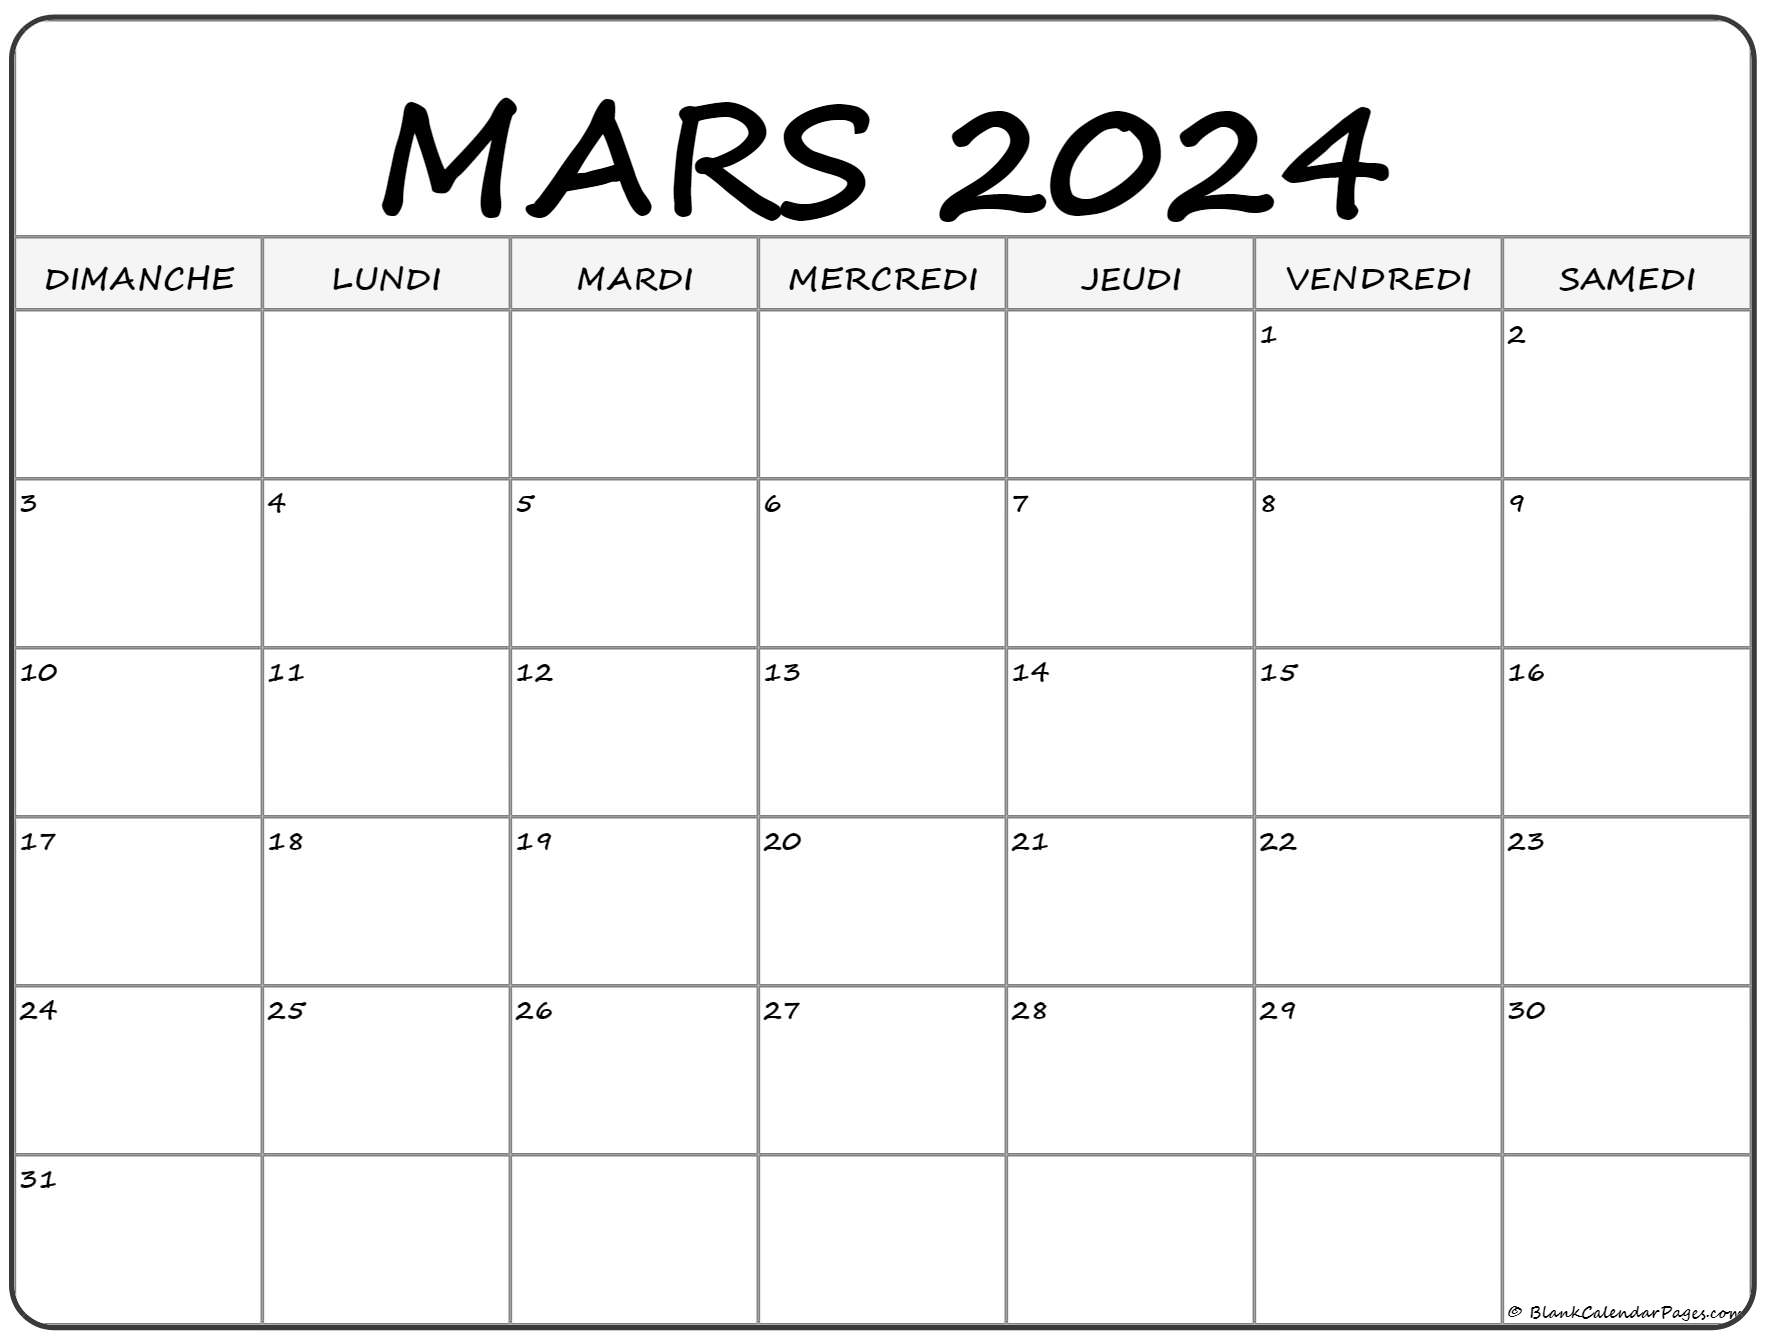 Calendrier Mois Mars 2022 mars 2022 calendrier imprimable | Calendrier gratuit